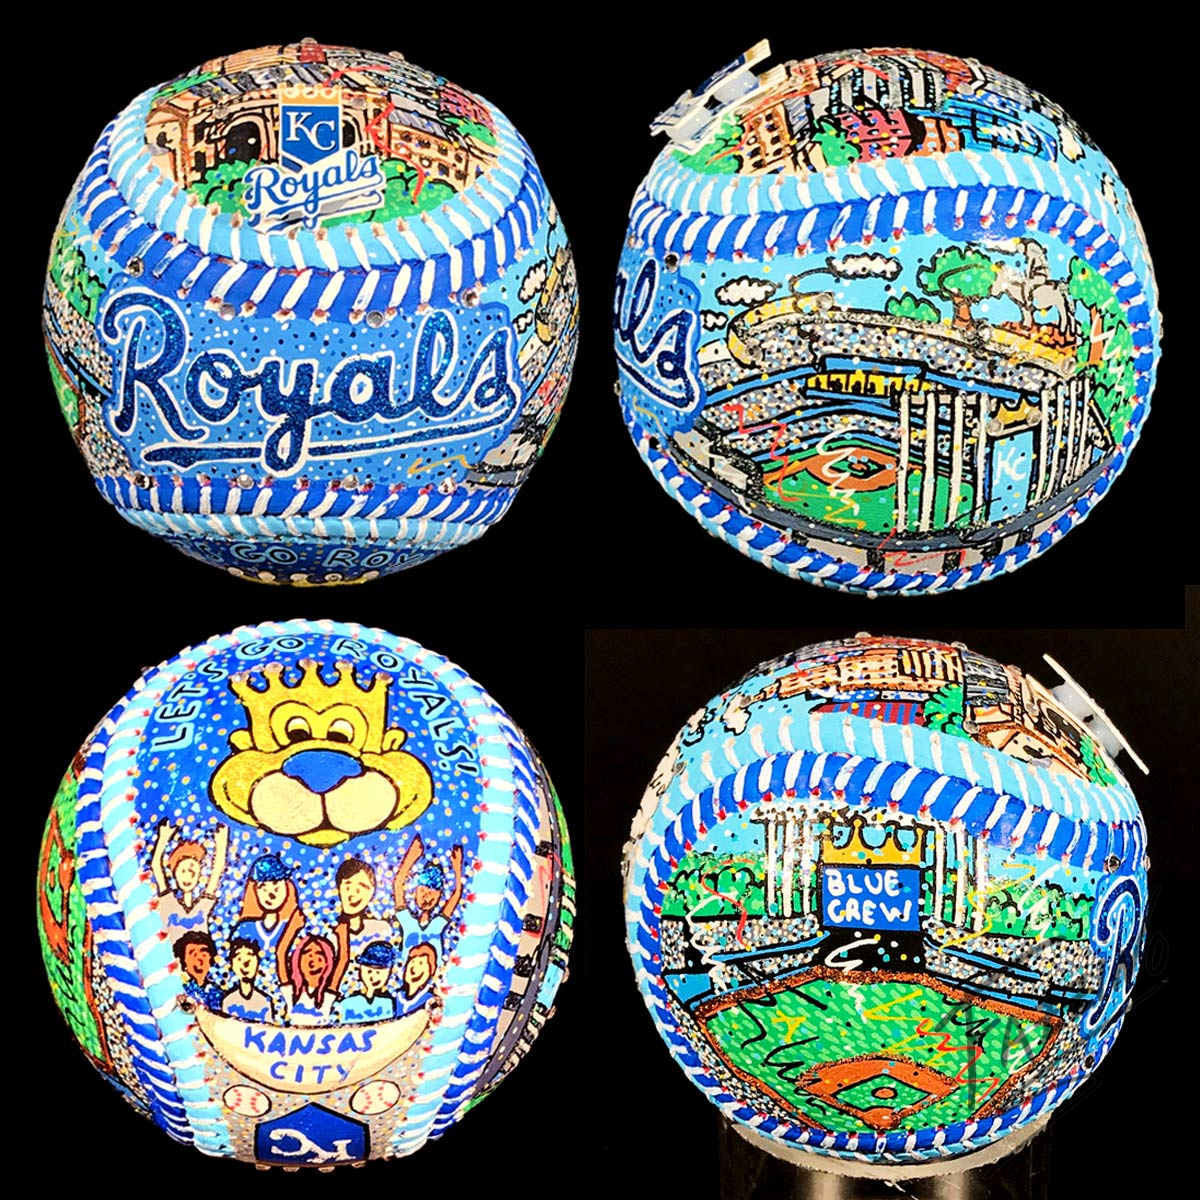 Kansas City Royals Hand Painted Baseballs Fazzino